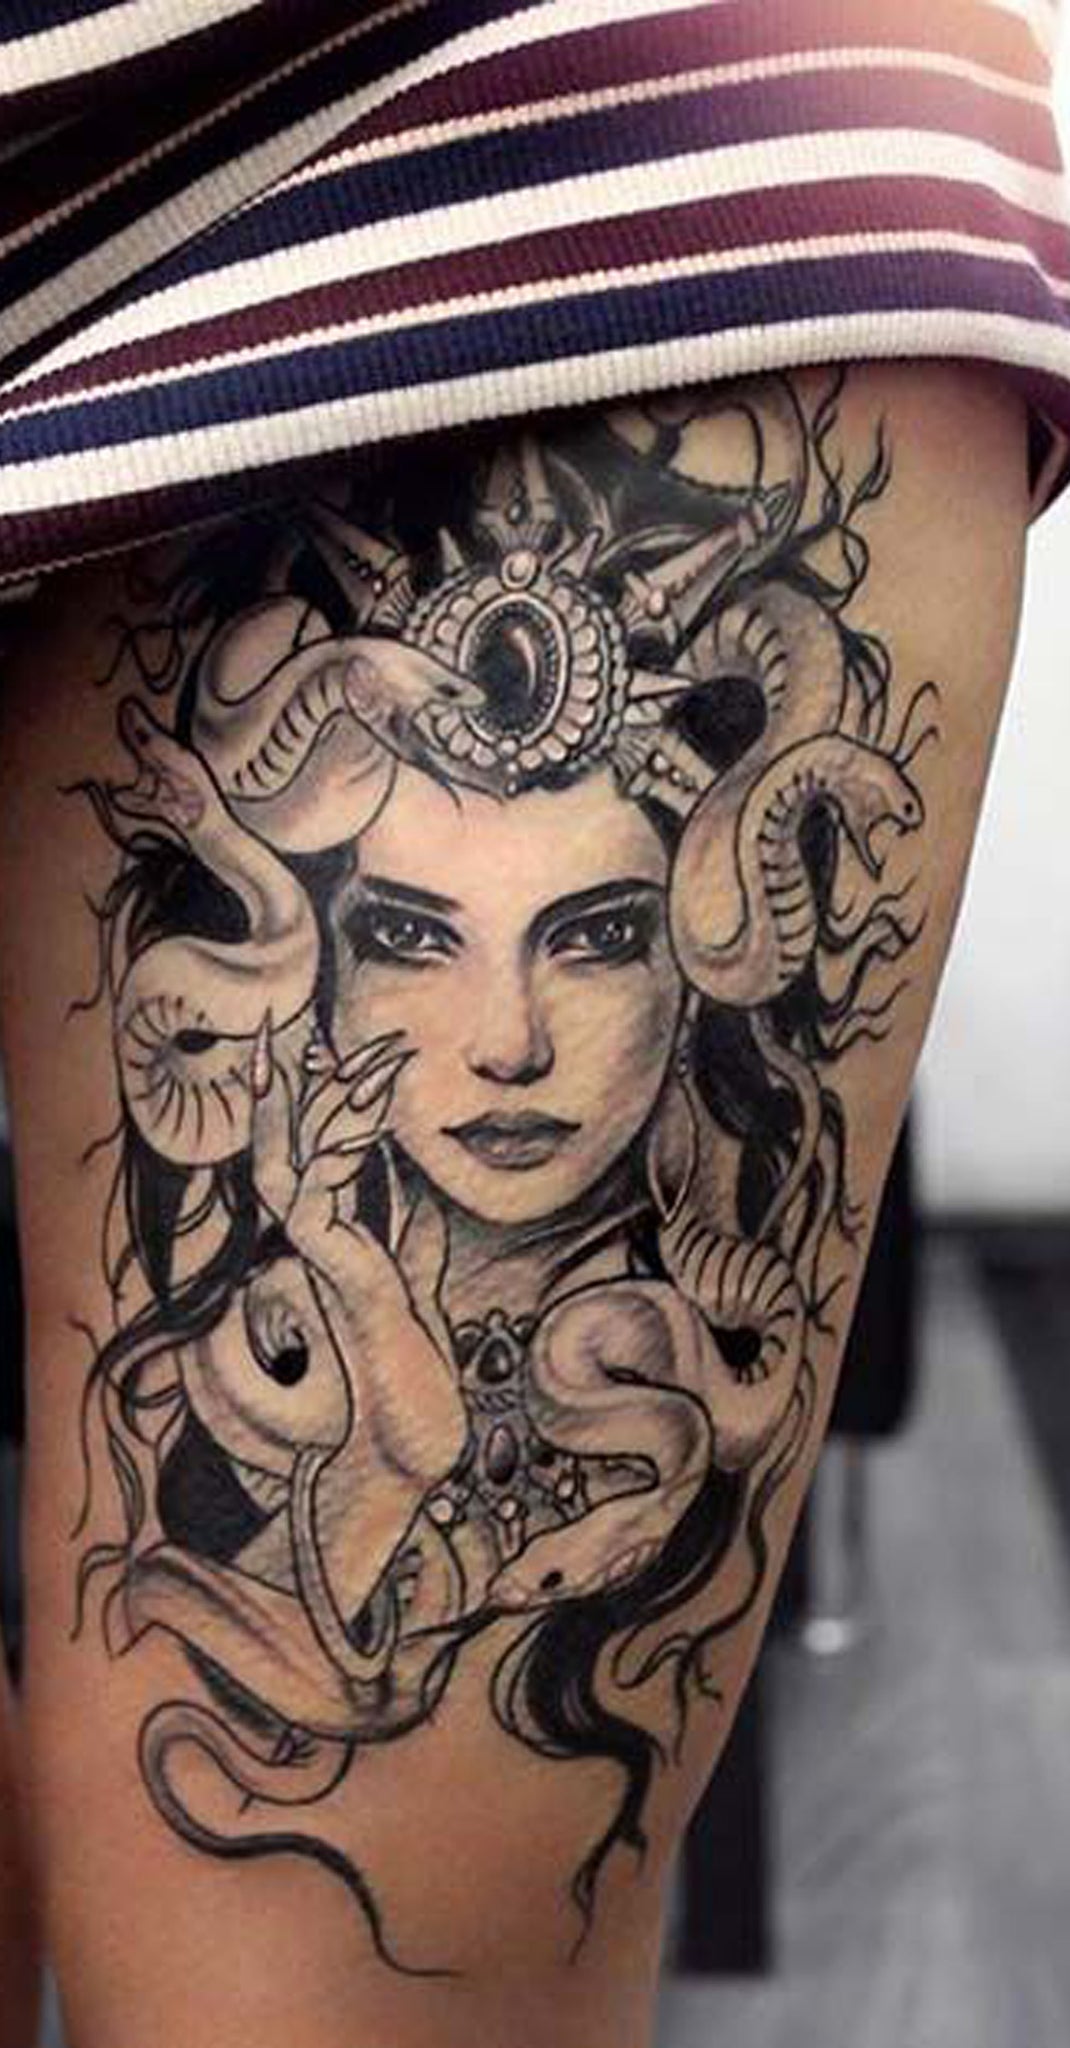 Cool Unique Thigh Tattoo Ideas for Women - Medusa Head Portrait Leg Tat - www.MyBodiArt.com #tattoo